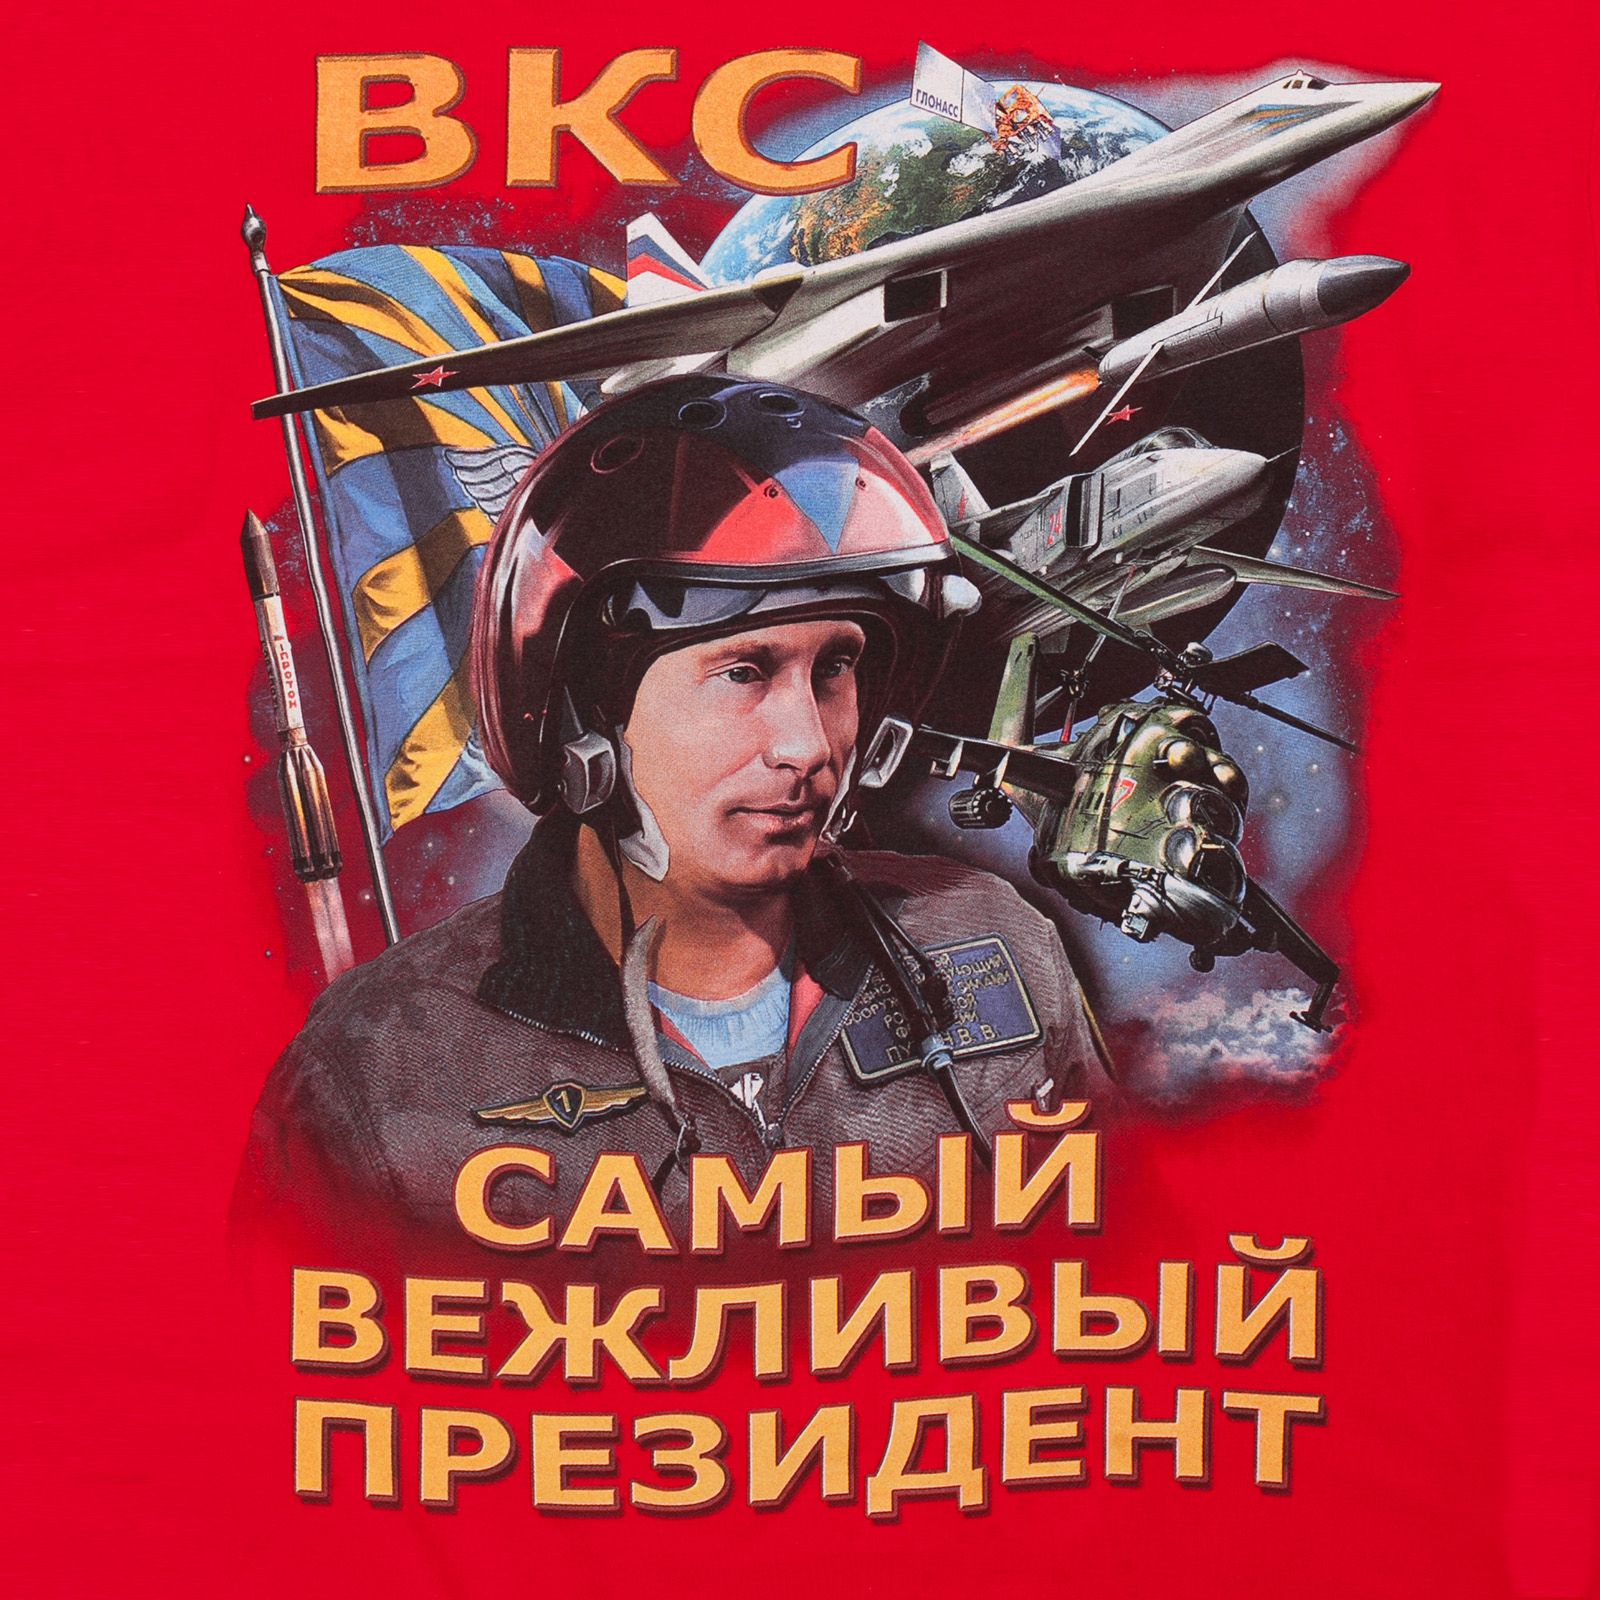 Армейская футболка ВКС с изображением президента России 